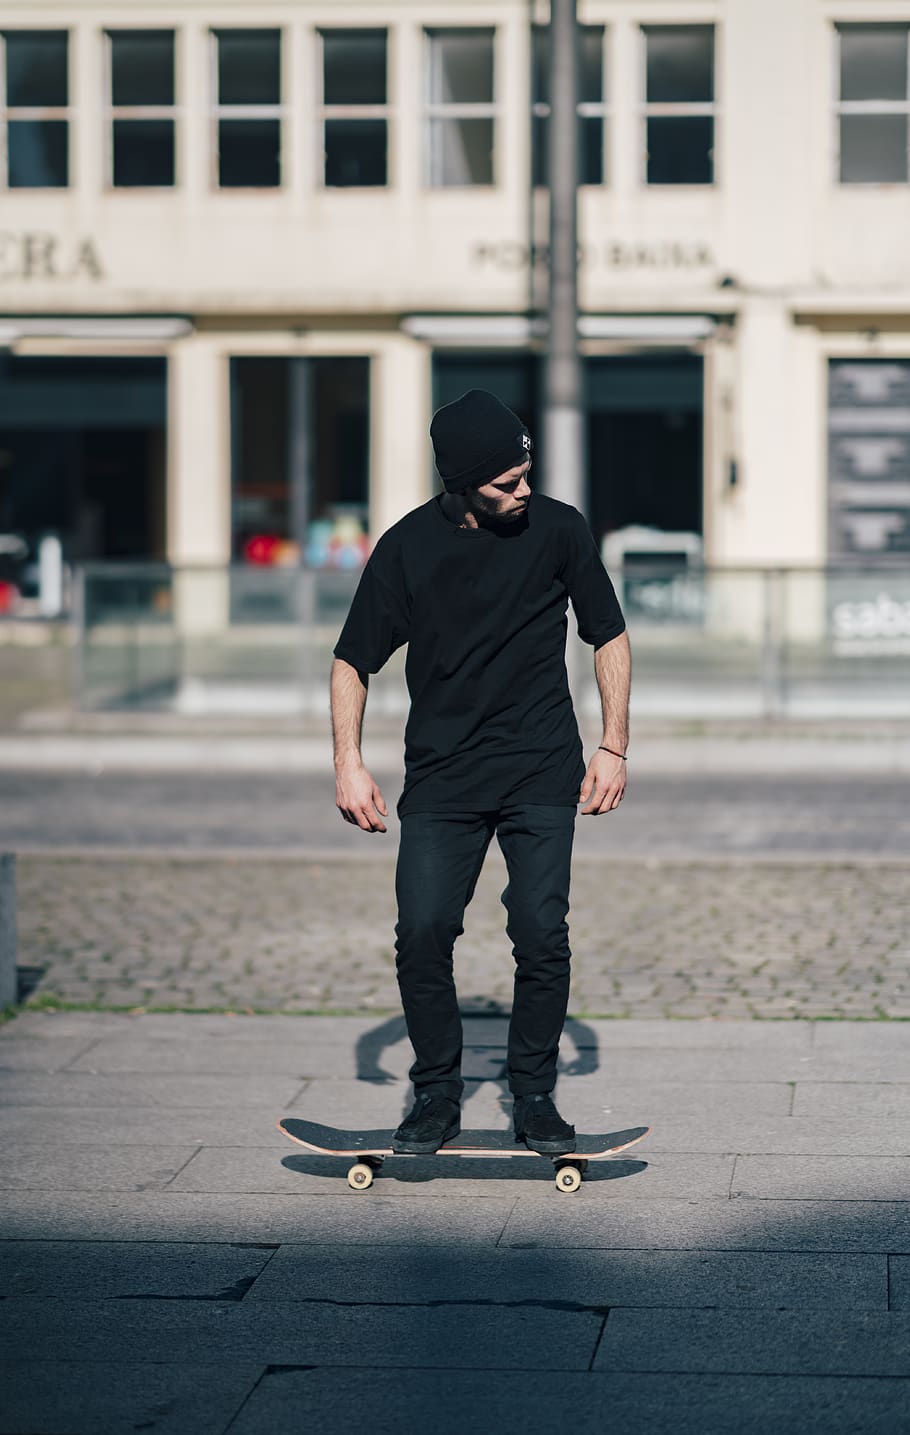 man in black shirt skating on pathway, human, person, apparel, HD wallpaper